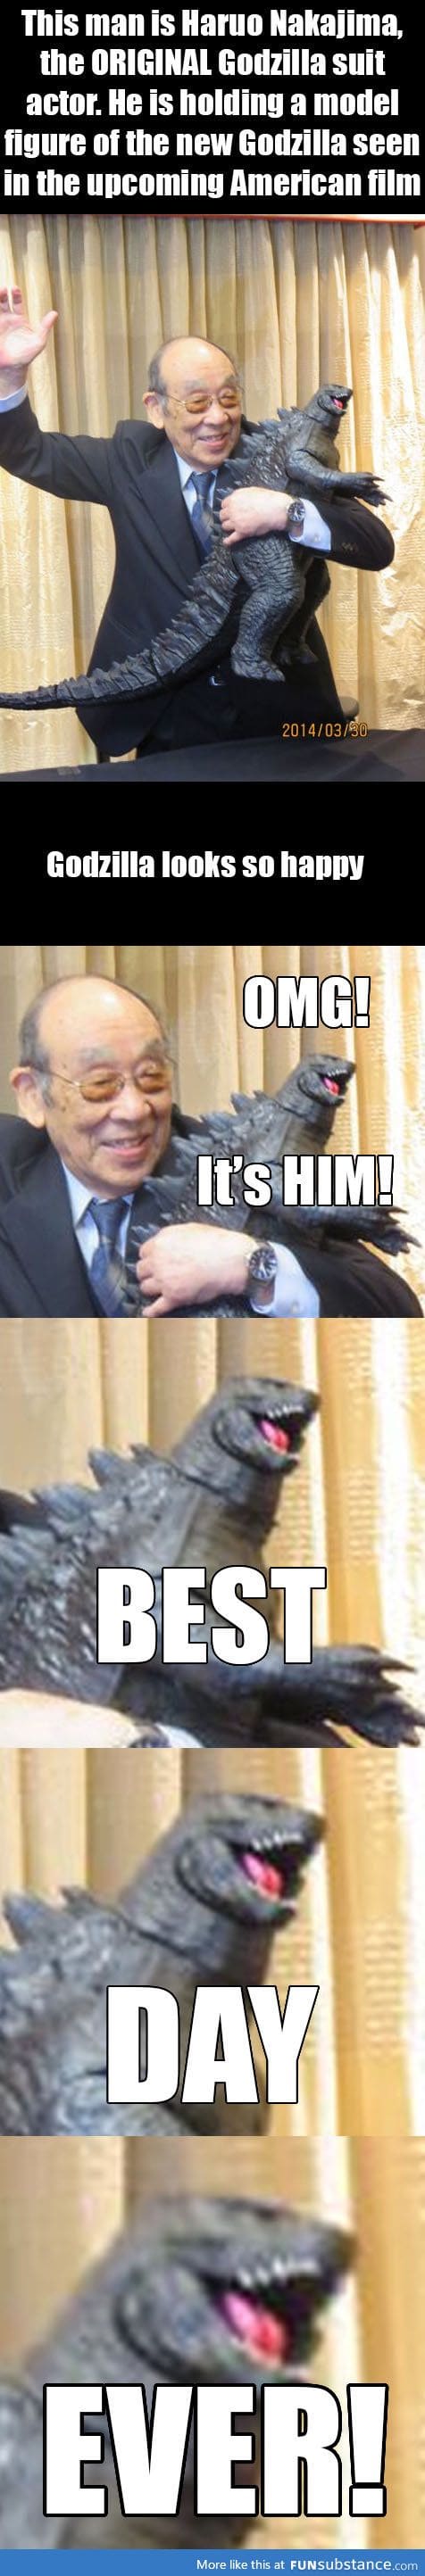 Original Godzilla actor